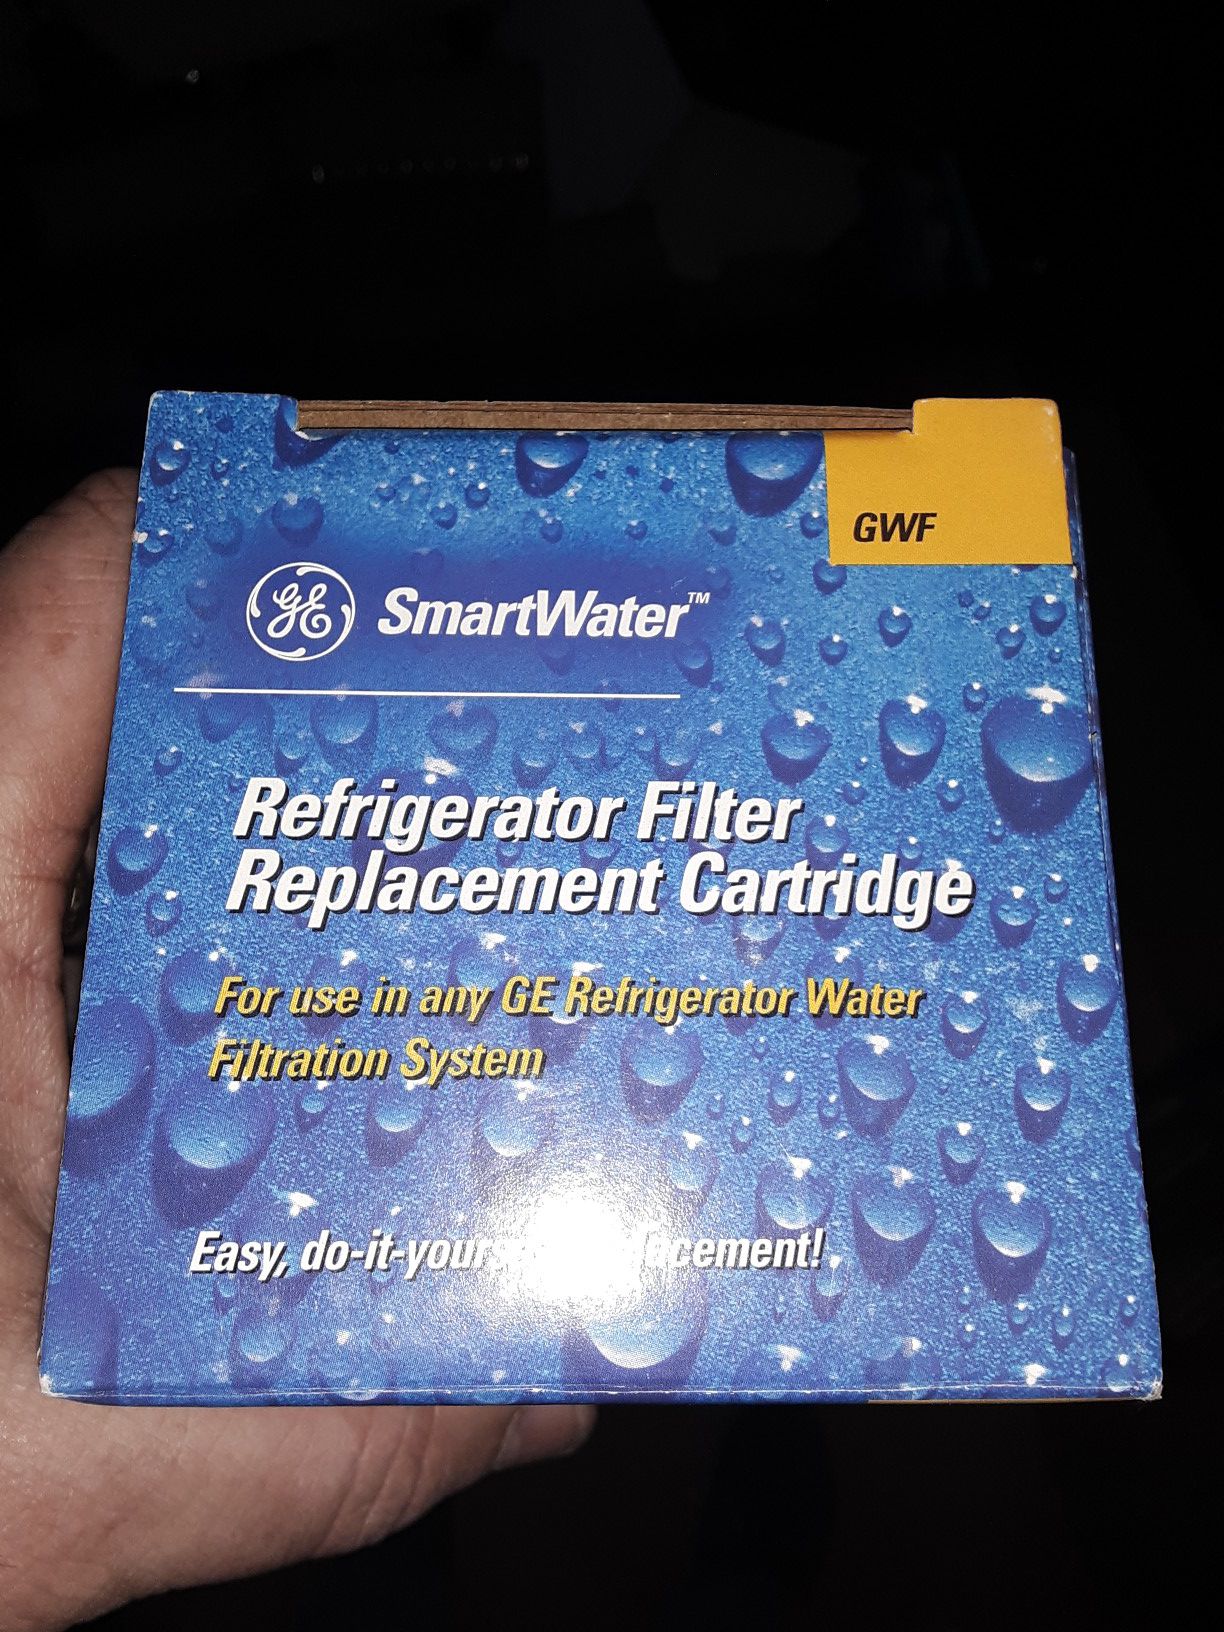 GE refrigerator filters